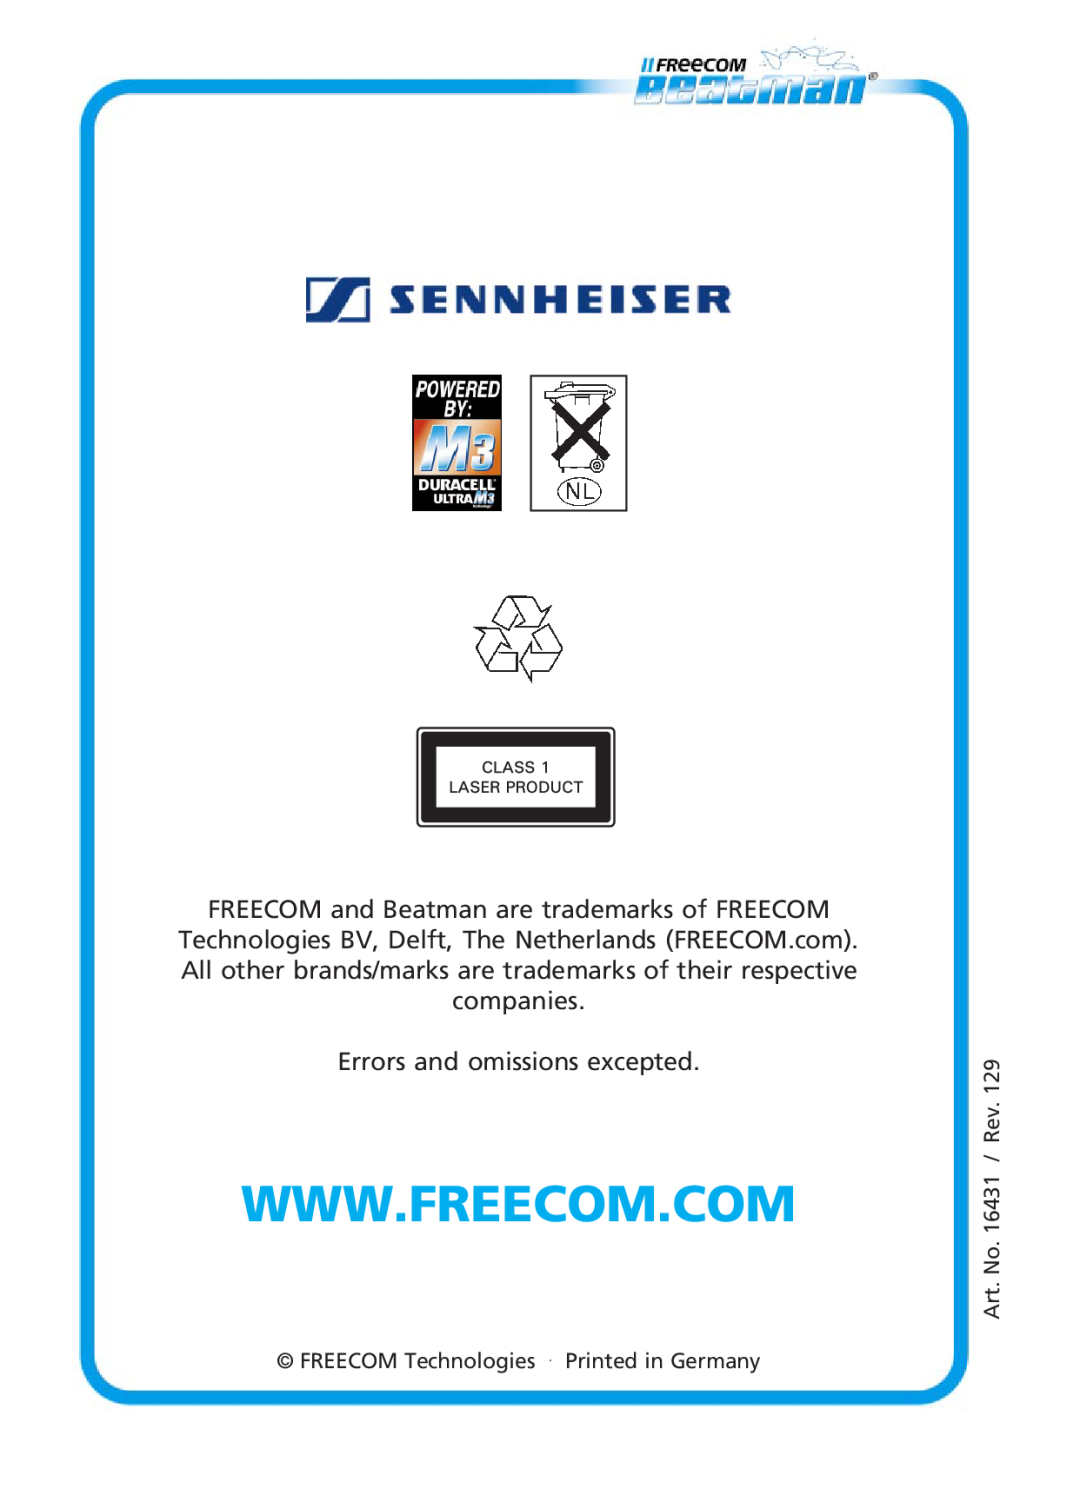 Freecom Technologies Beatman Mini CD I manual Errors and omissions excepted, Art. No. 16431 / Rev 